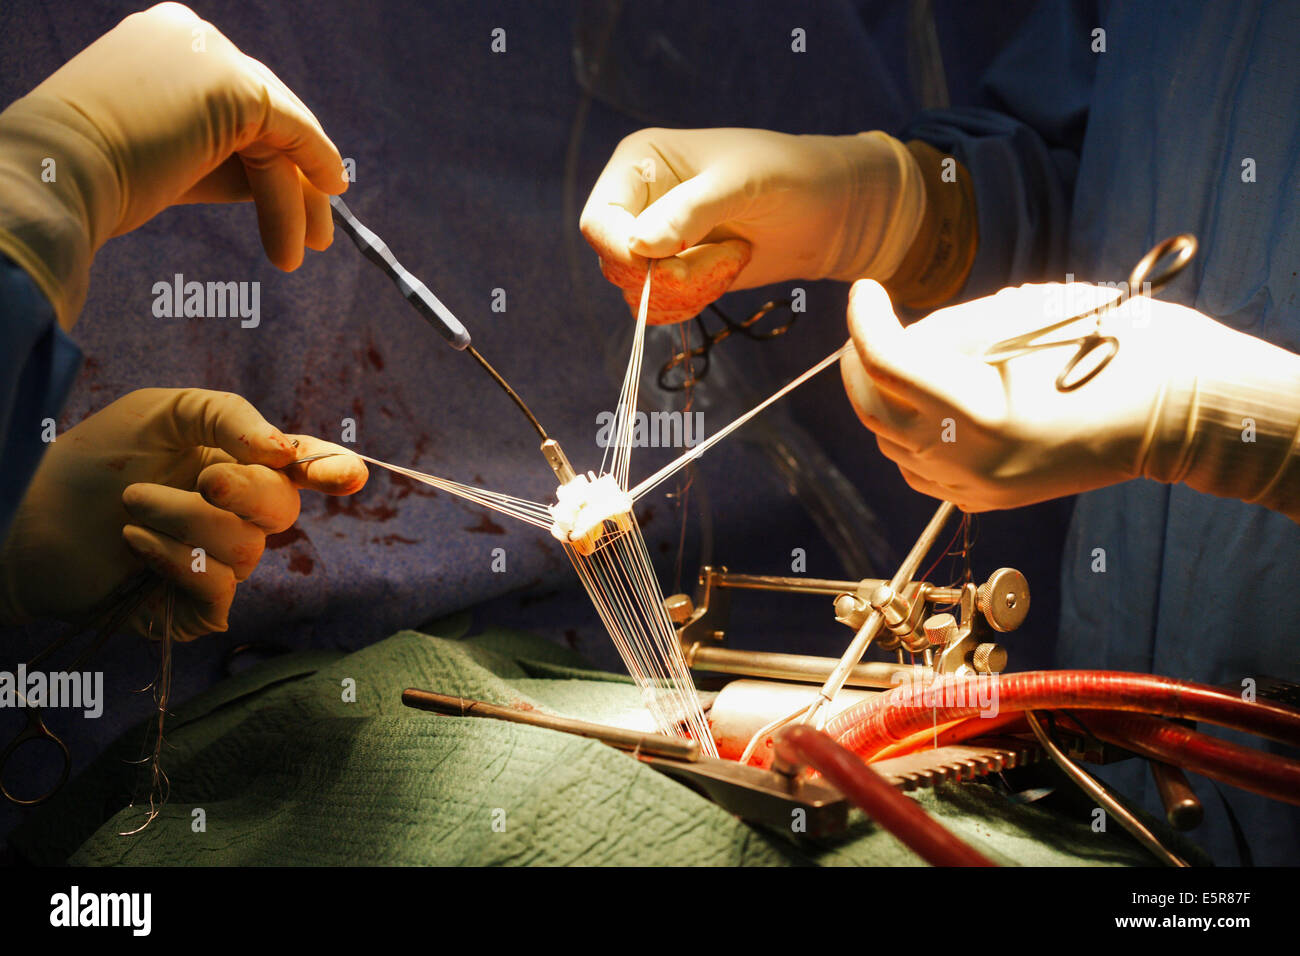 Mitral Valve Replacement Surgery An Open Heart Surgery Requiring A